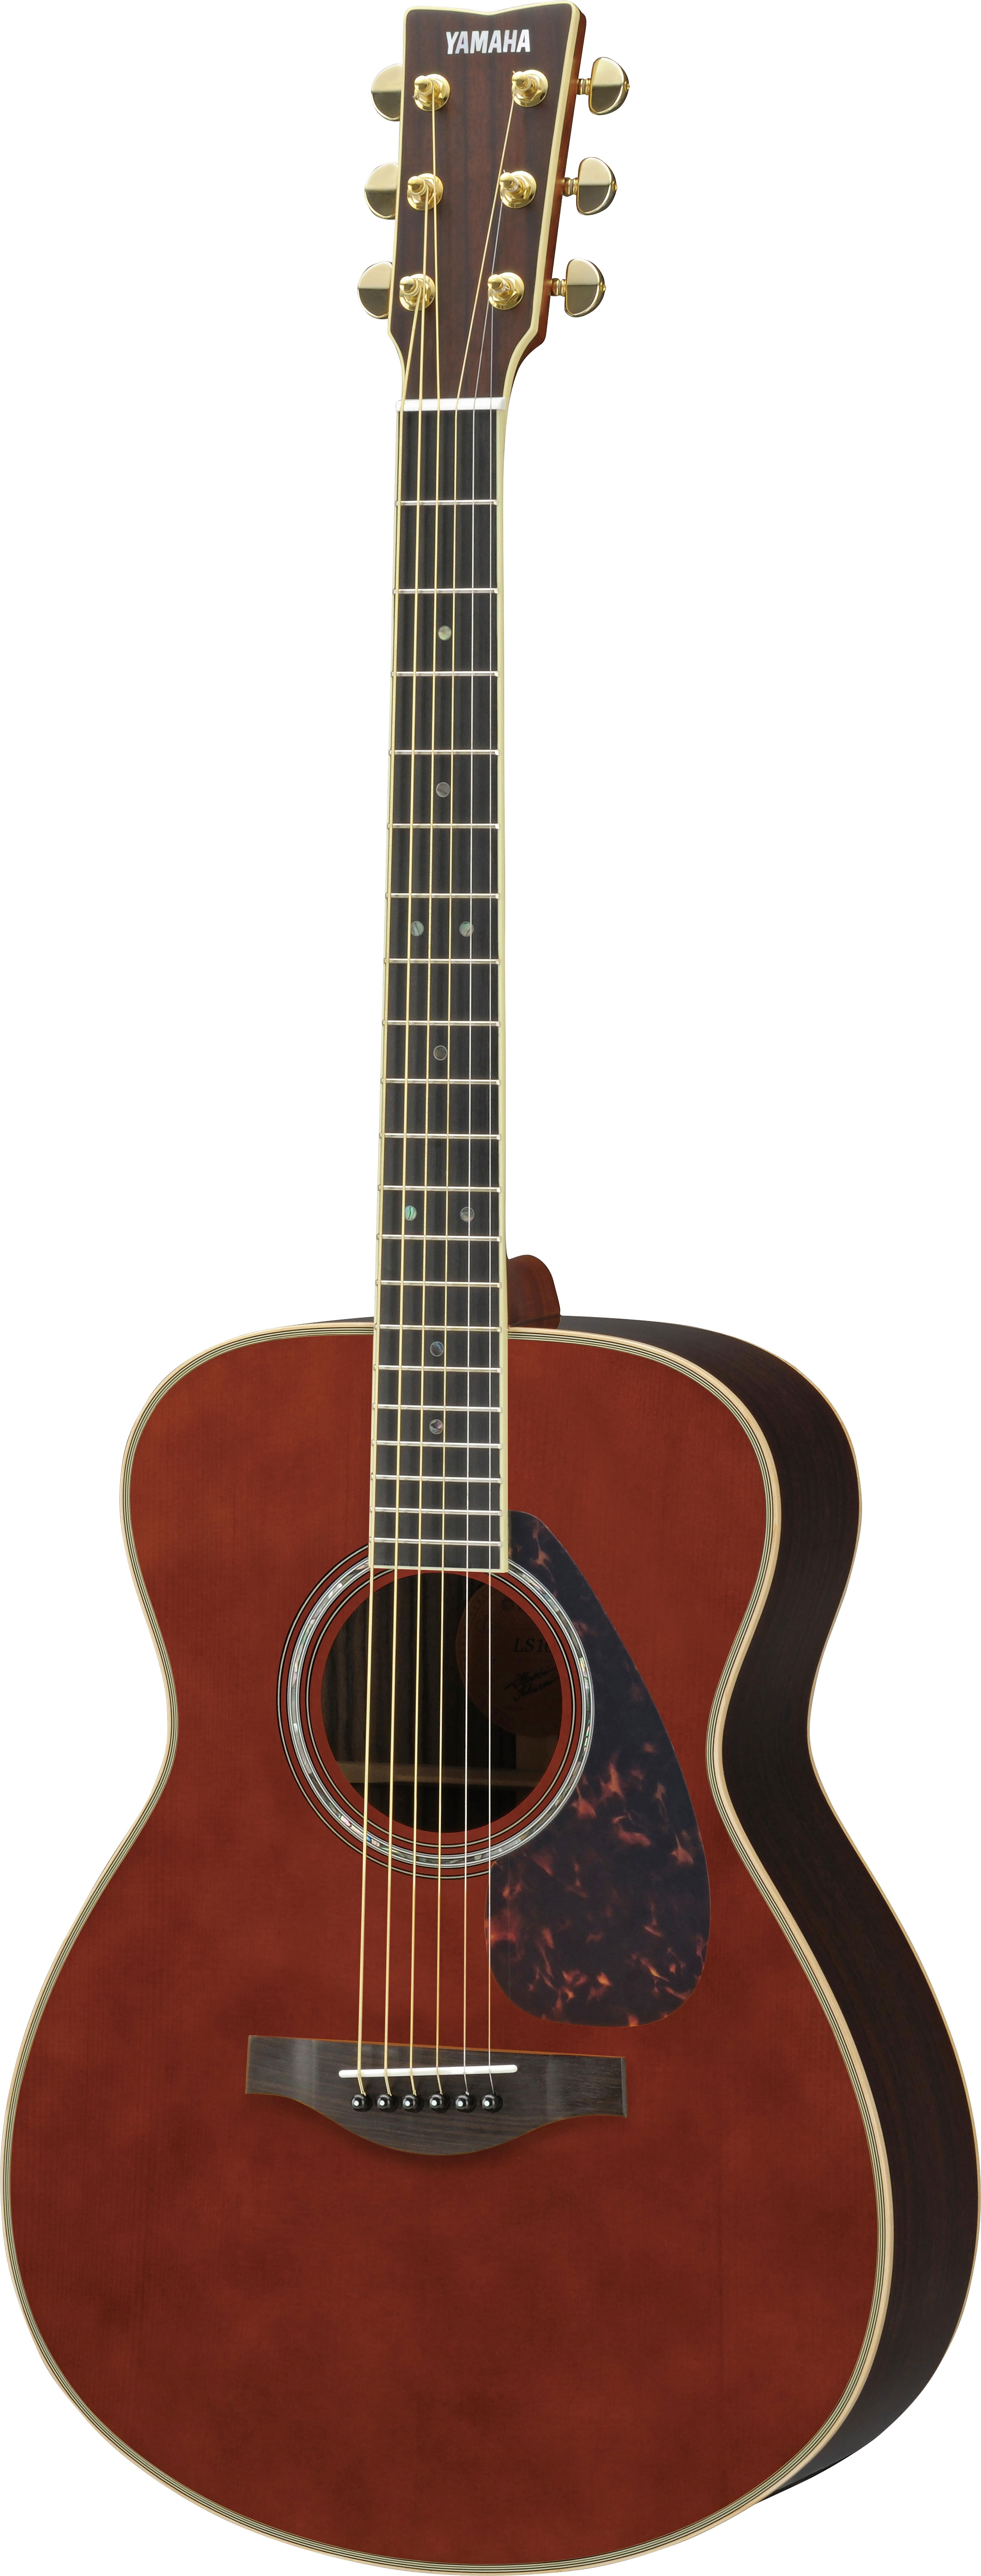 L Series - LS Series - Acoustic Guitars - Guitars, Basses & Amps